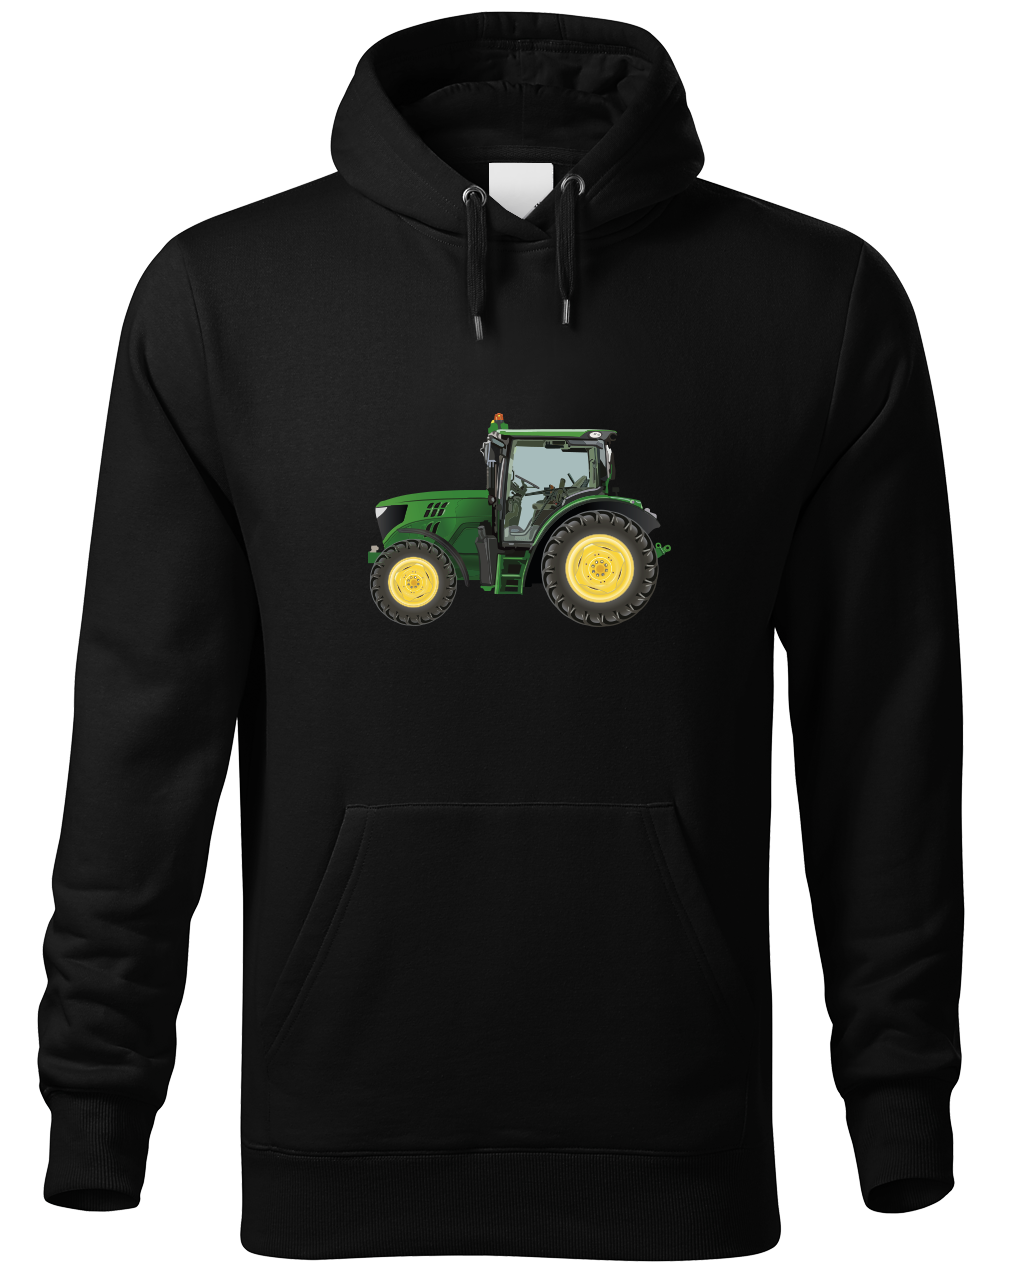 Mikina s traktorem - Zelený traktor Velikost: S, Barva: Černá